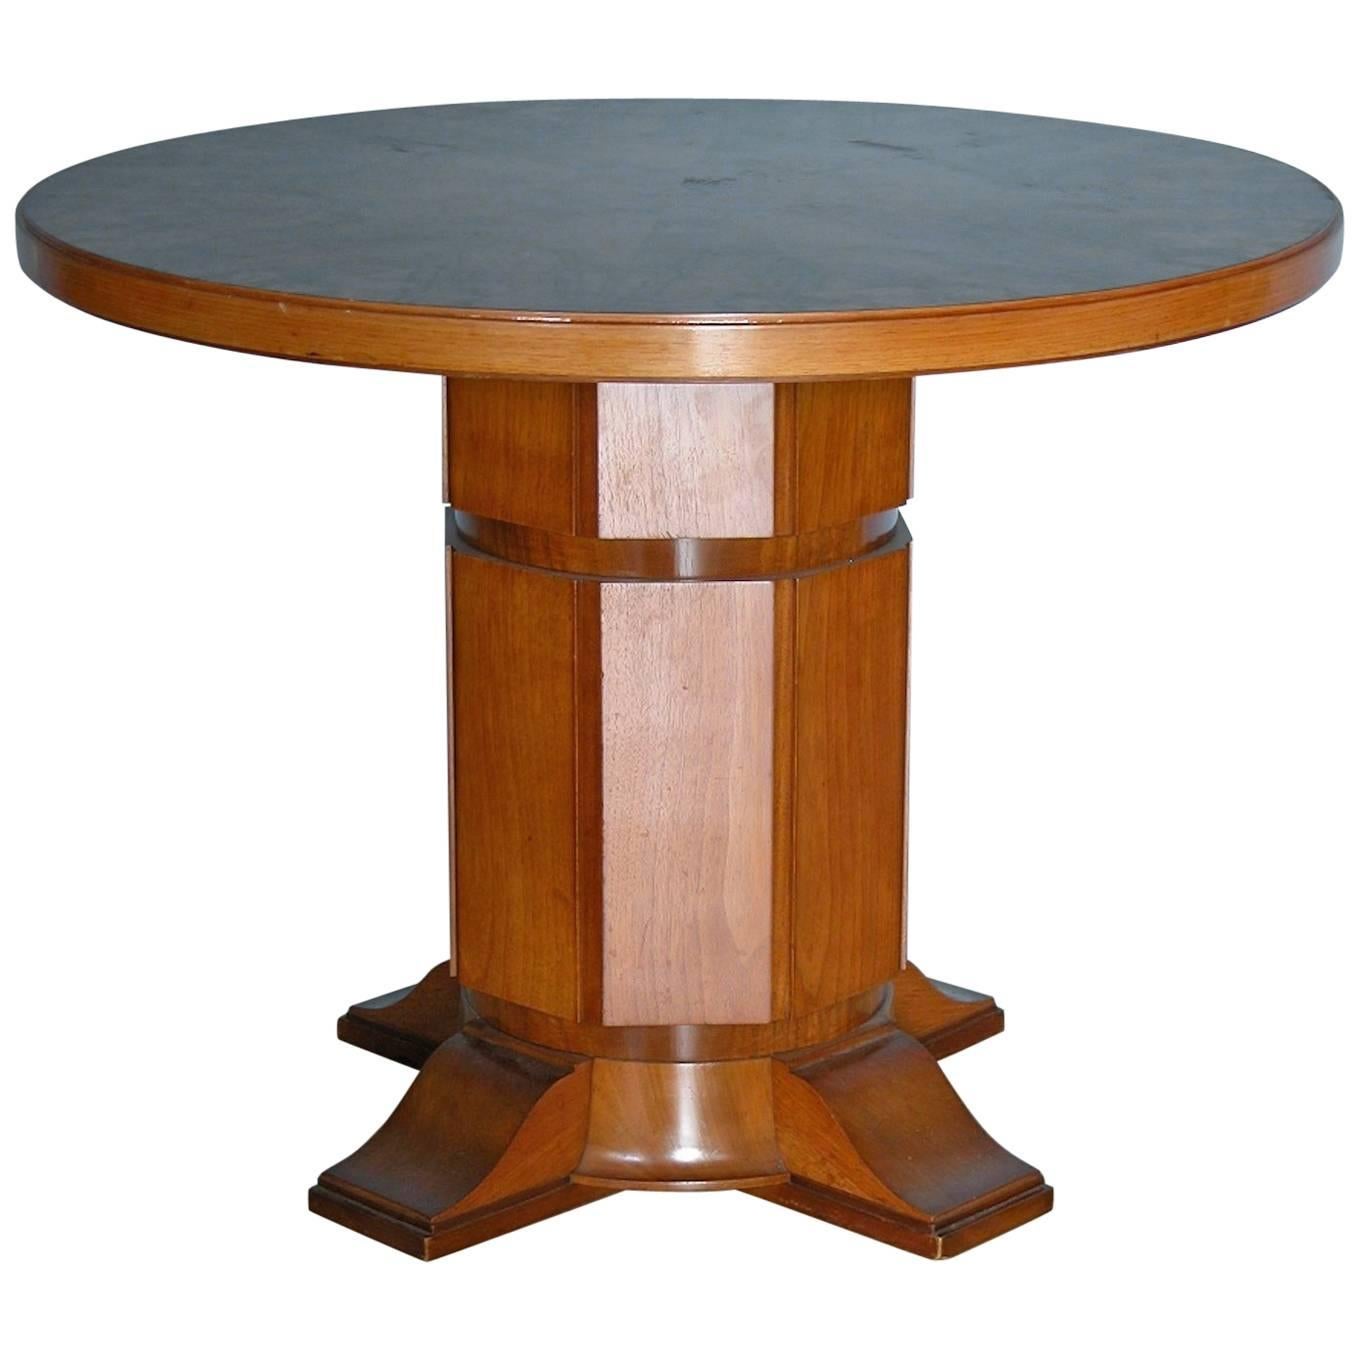 Johan Gudmann Rohde, Table with Centre Pillar, Origin: Denmark, Circa 1900-1920